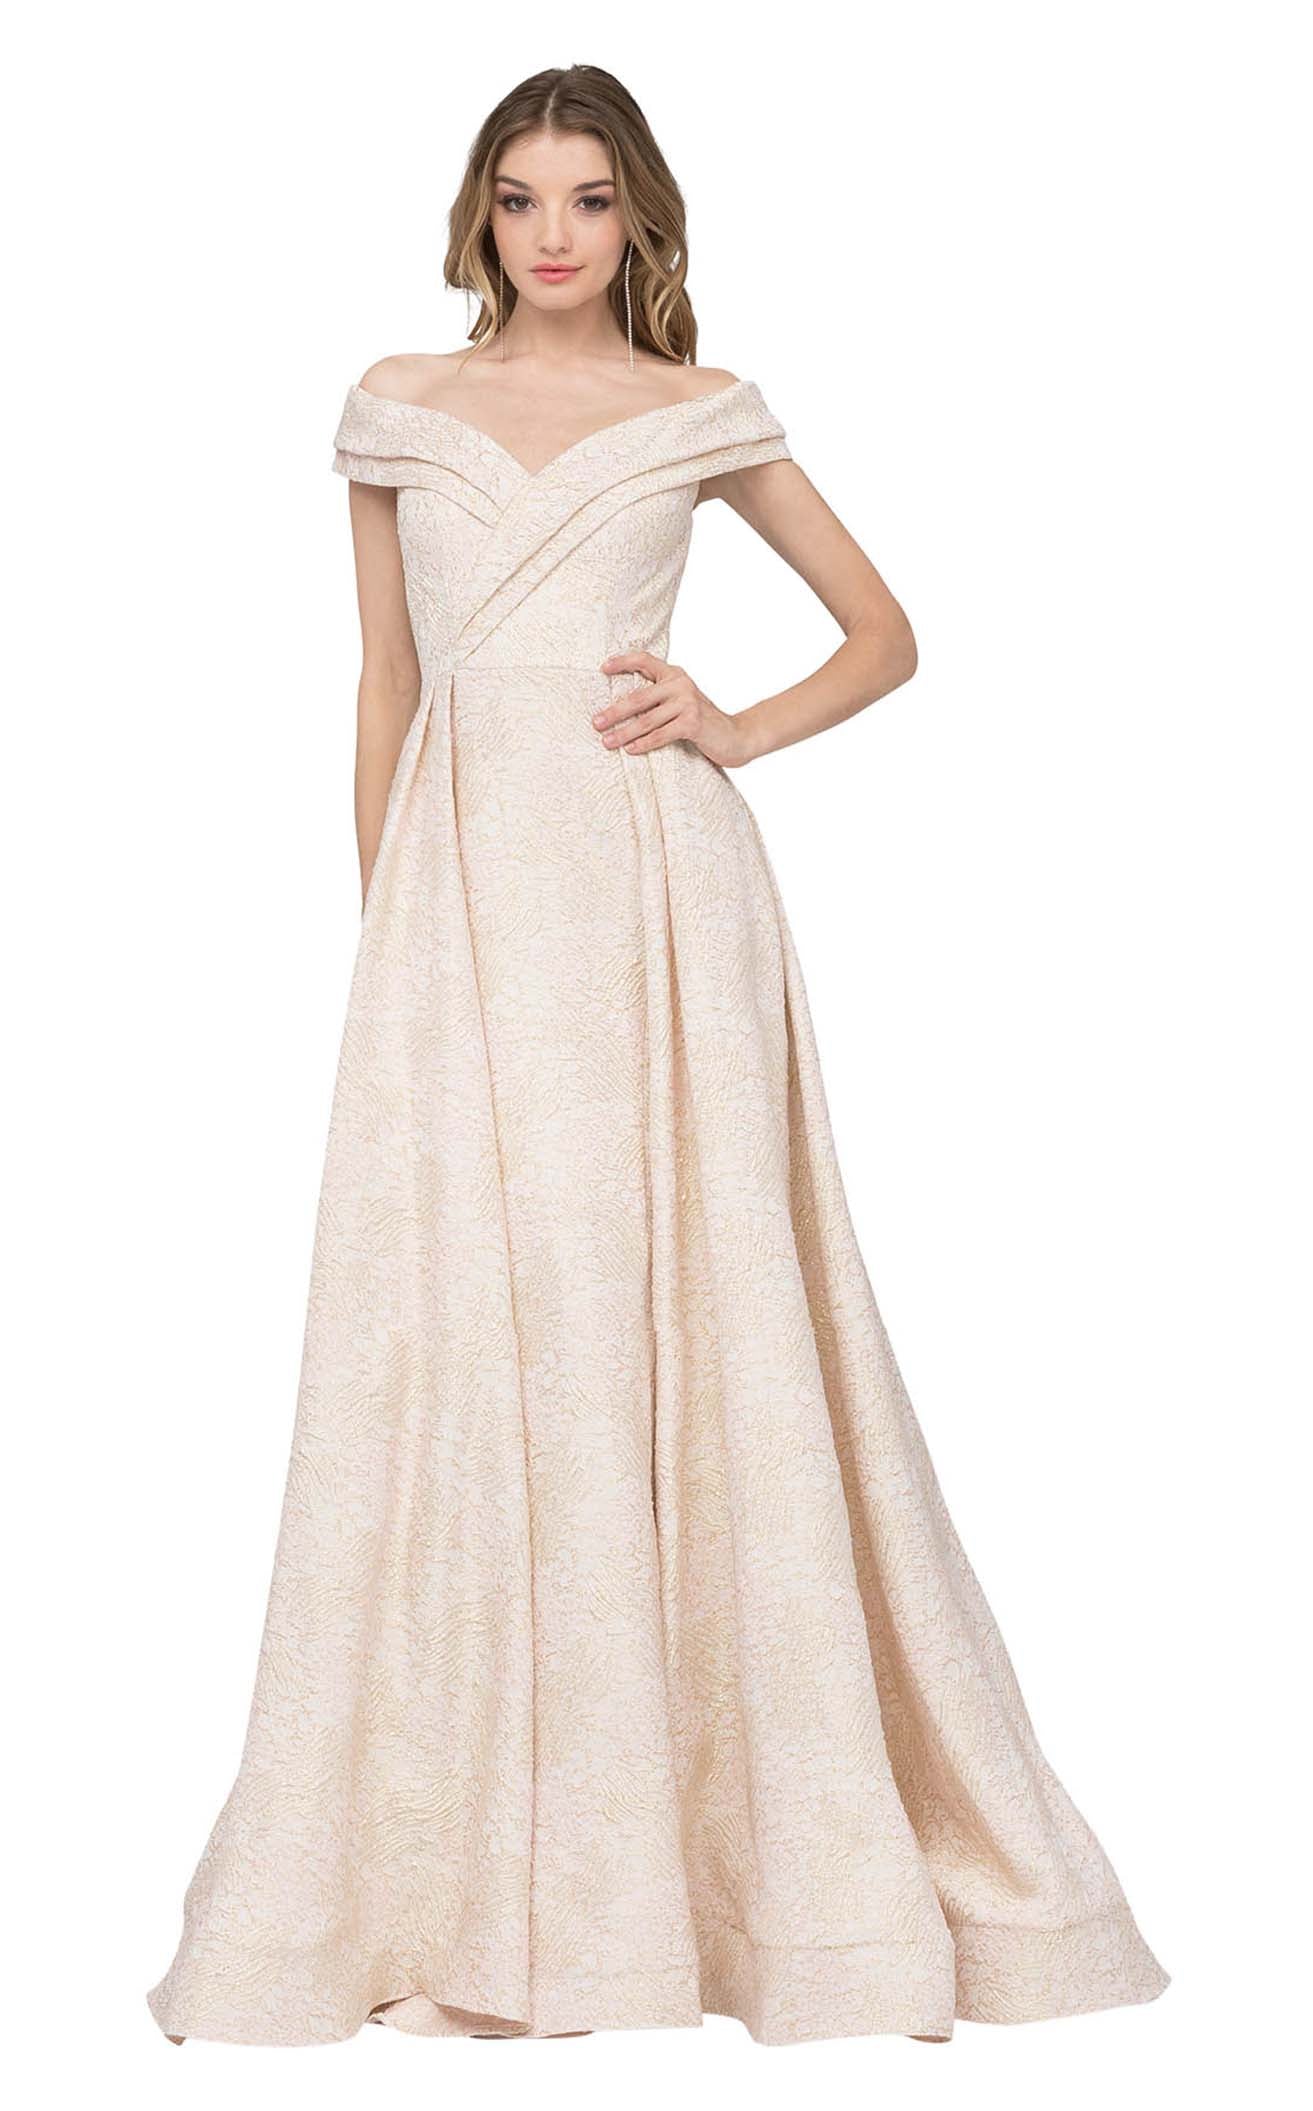 Cecilia Couture 1472 Dress | Buy Designer Gowns & Evening Dresses ...